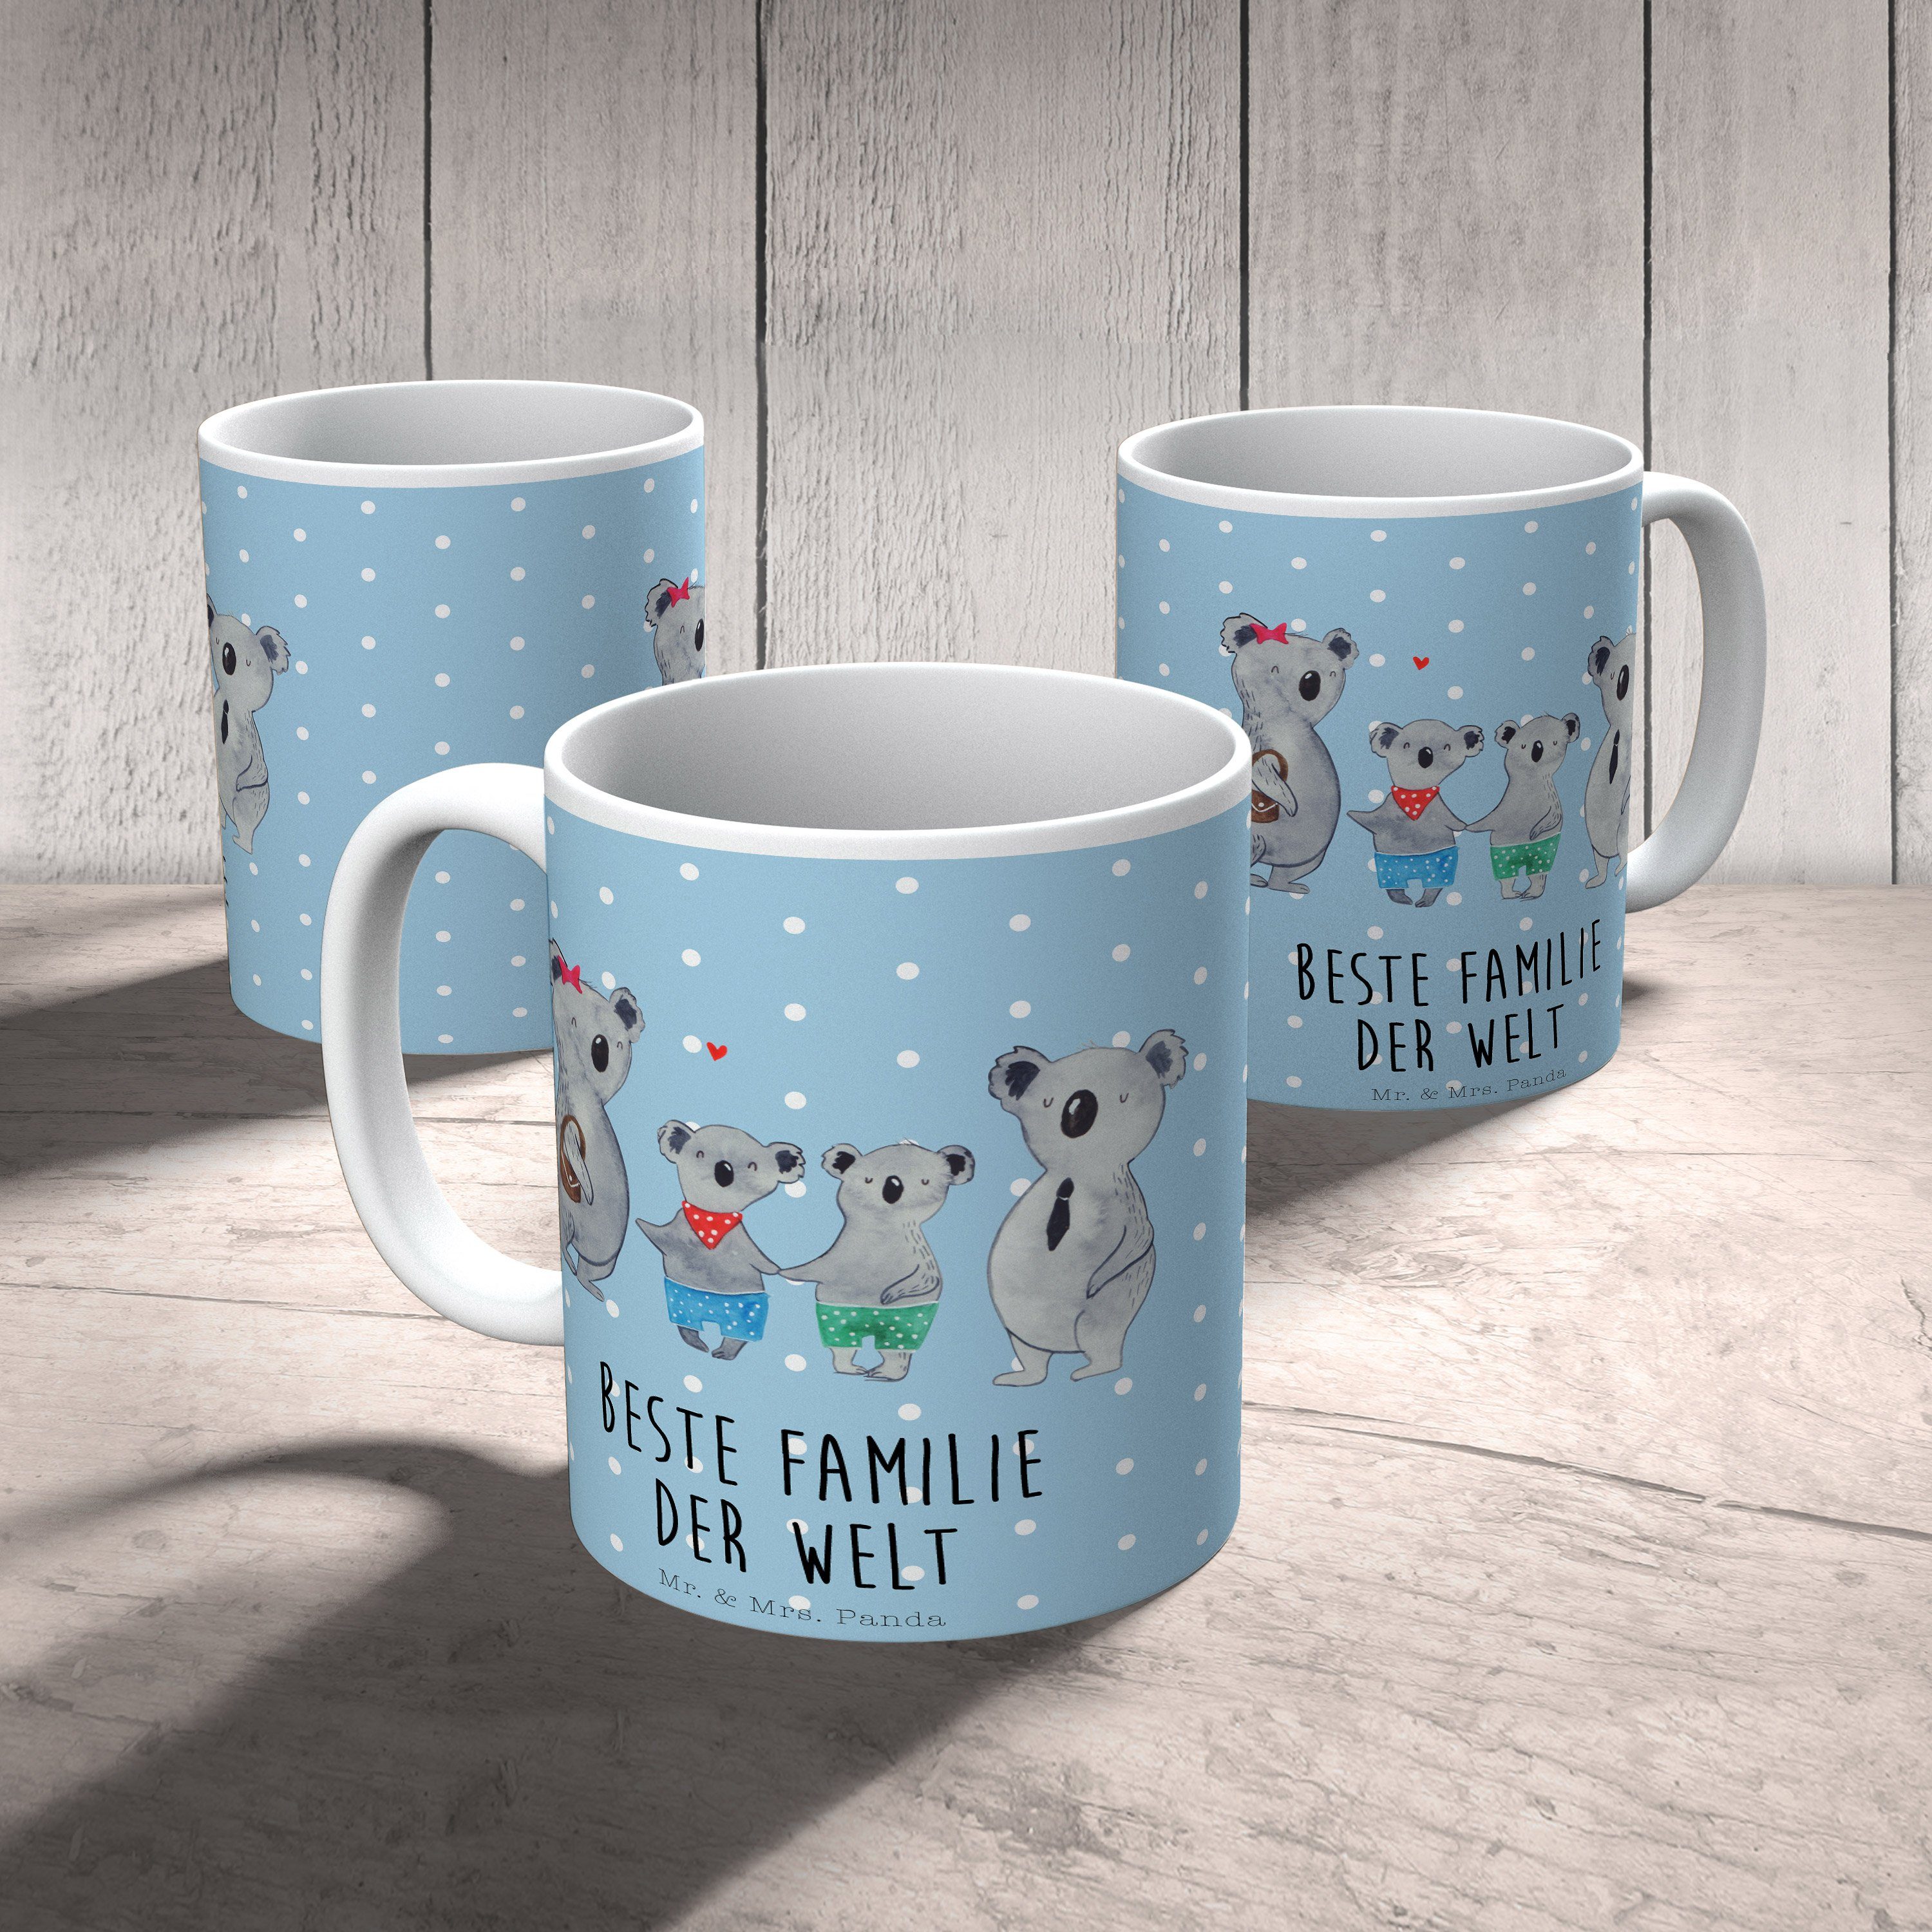 Mr. & Mrs. Panda Tasse Keramik Koala Blau Koalabär, - - Familie Pastell Kaffeetasse, Geschenk, zwei